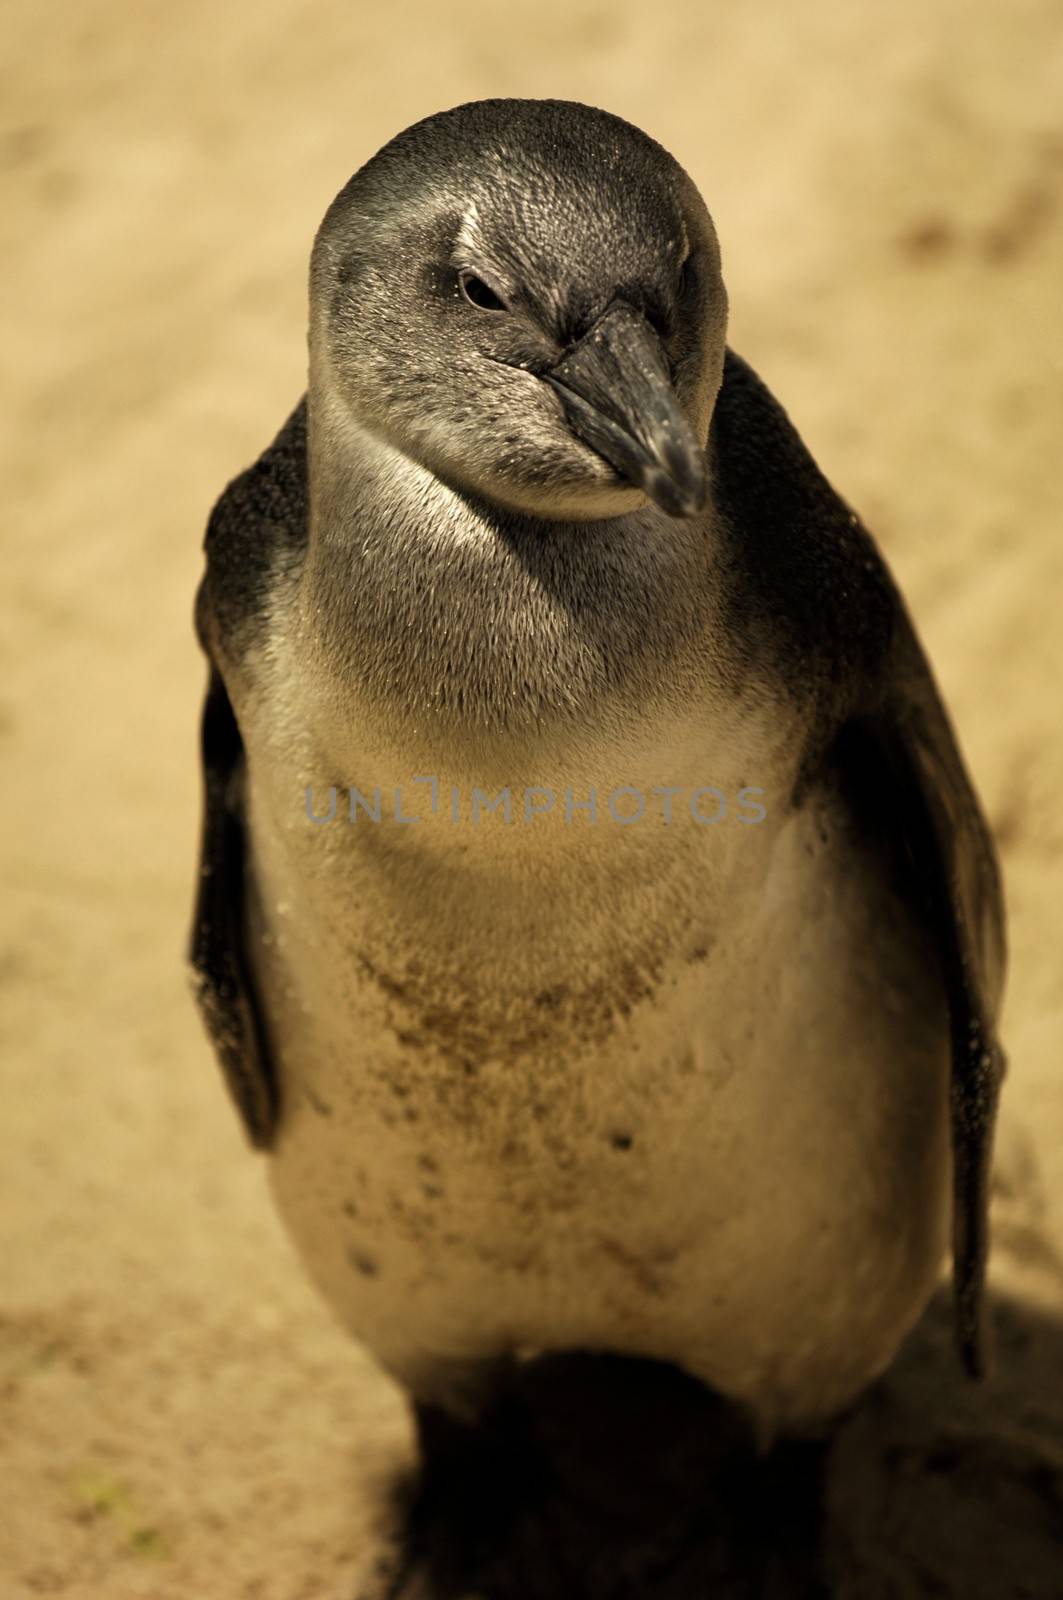 Photos of Fairy Penguins taken in captivity